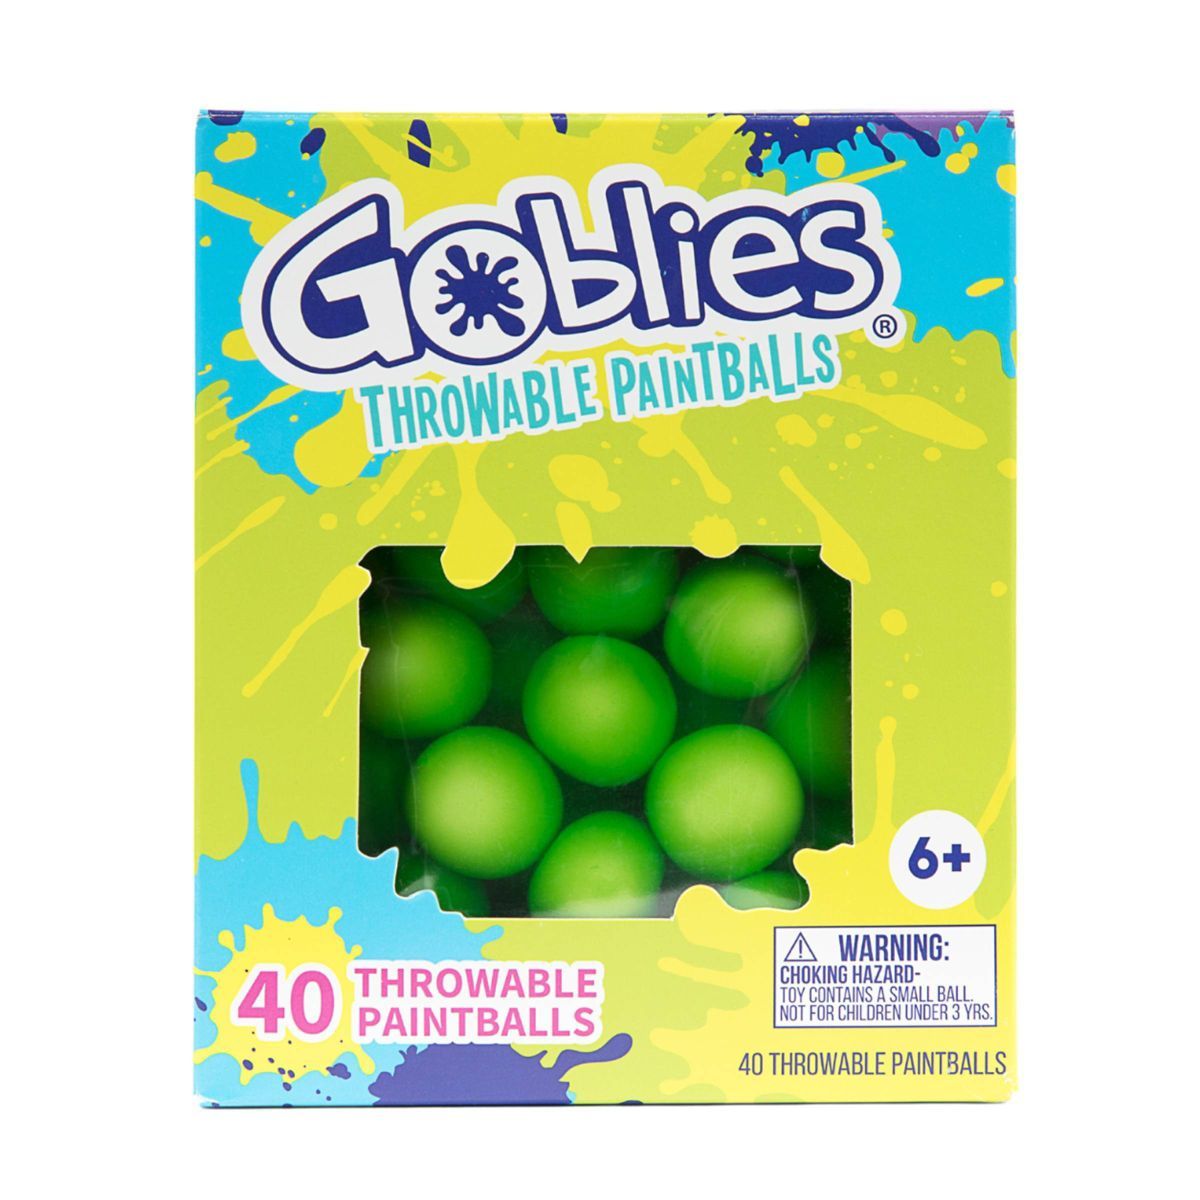 Goblies Throwable Paintballs 40ct | Target